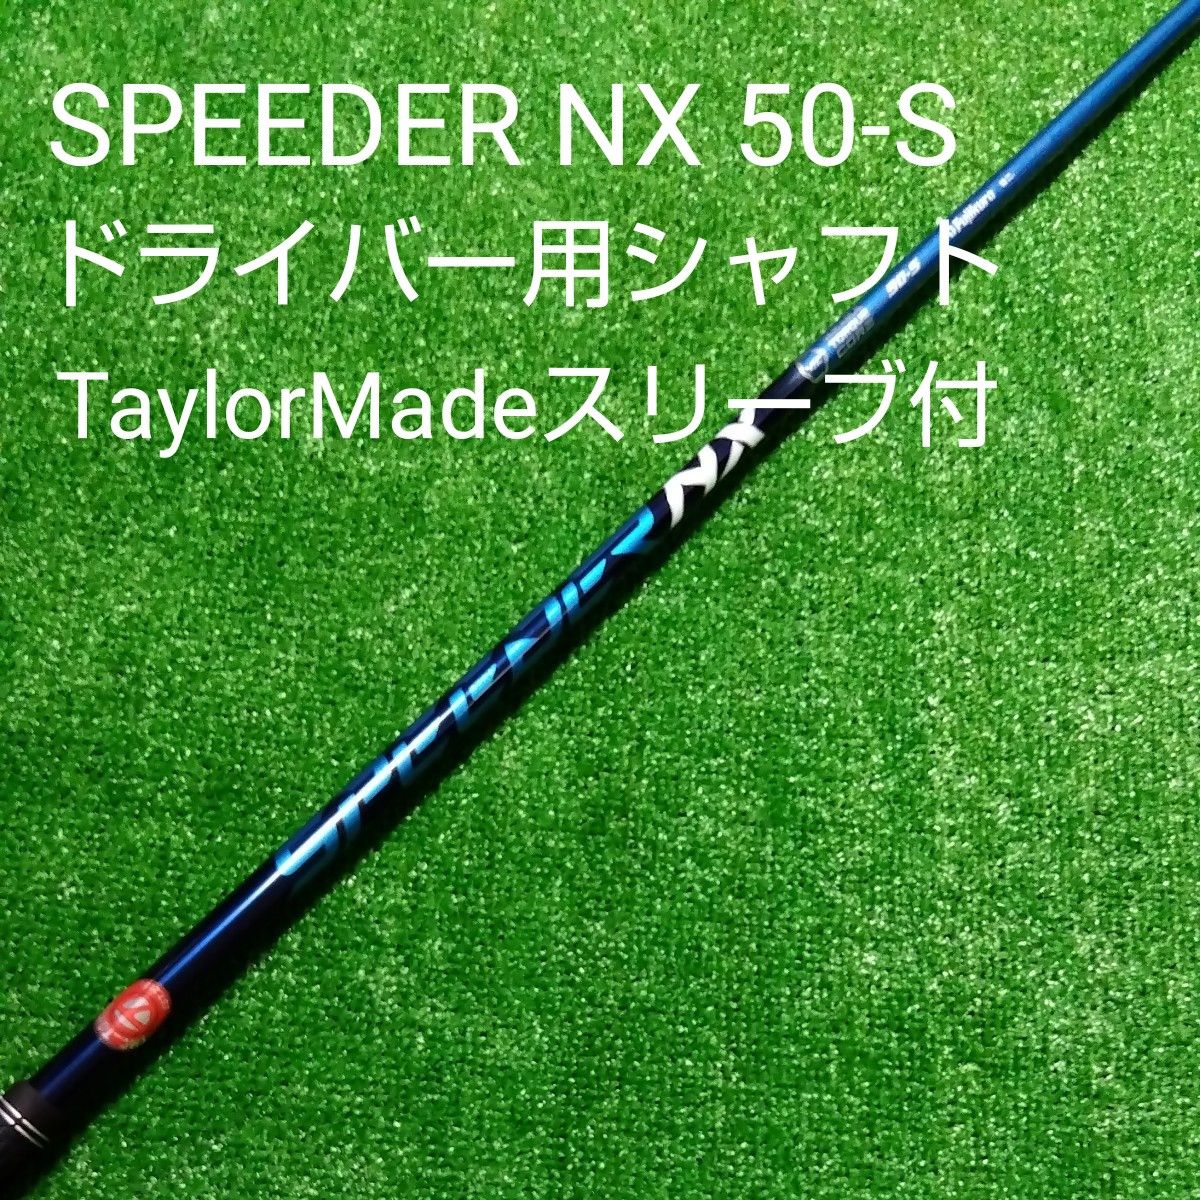 Speeder NX ブルー 50-S テーラーメイド ドライバー用 シャフト-